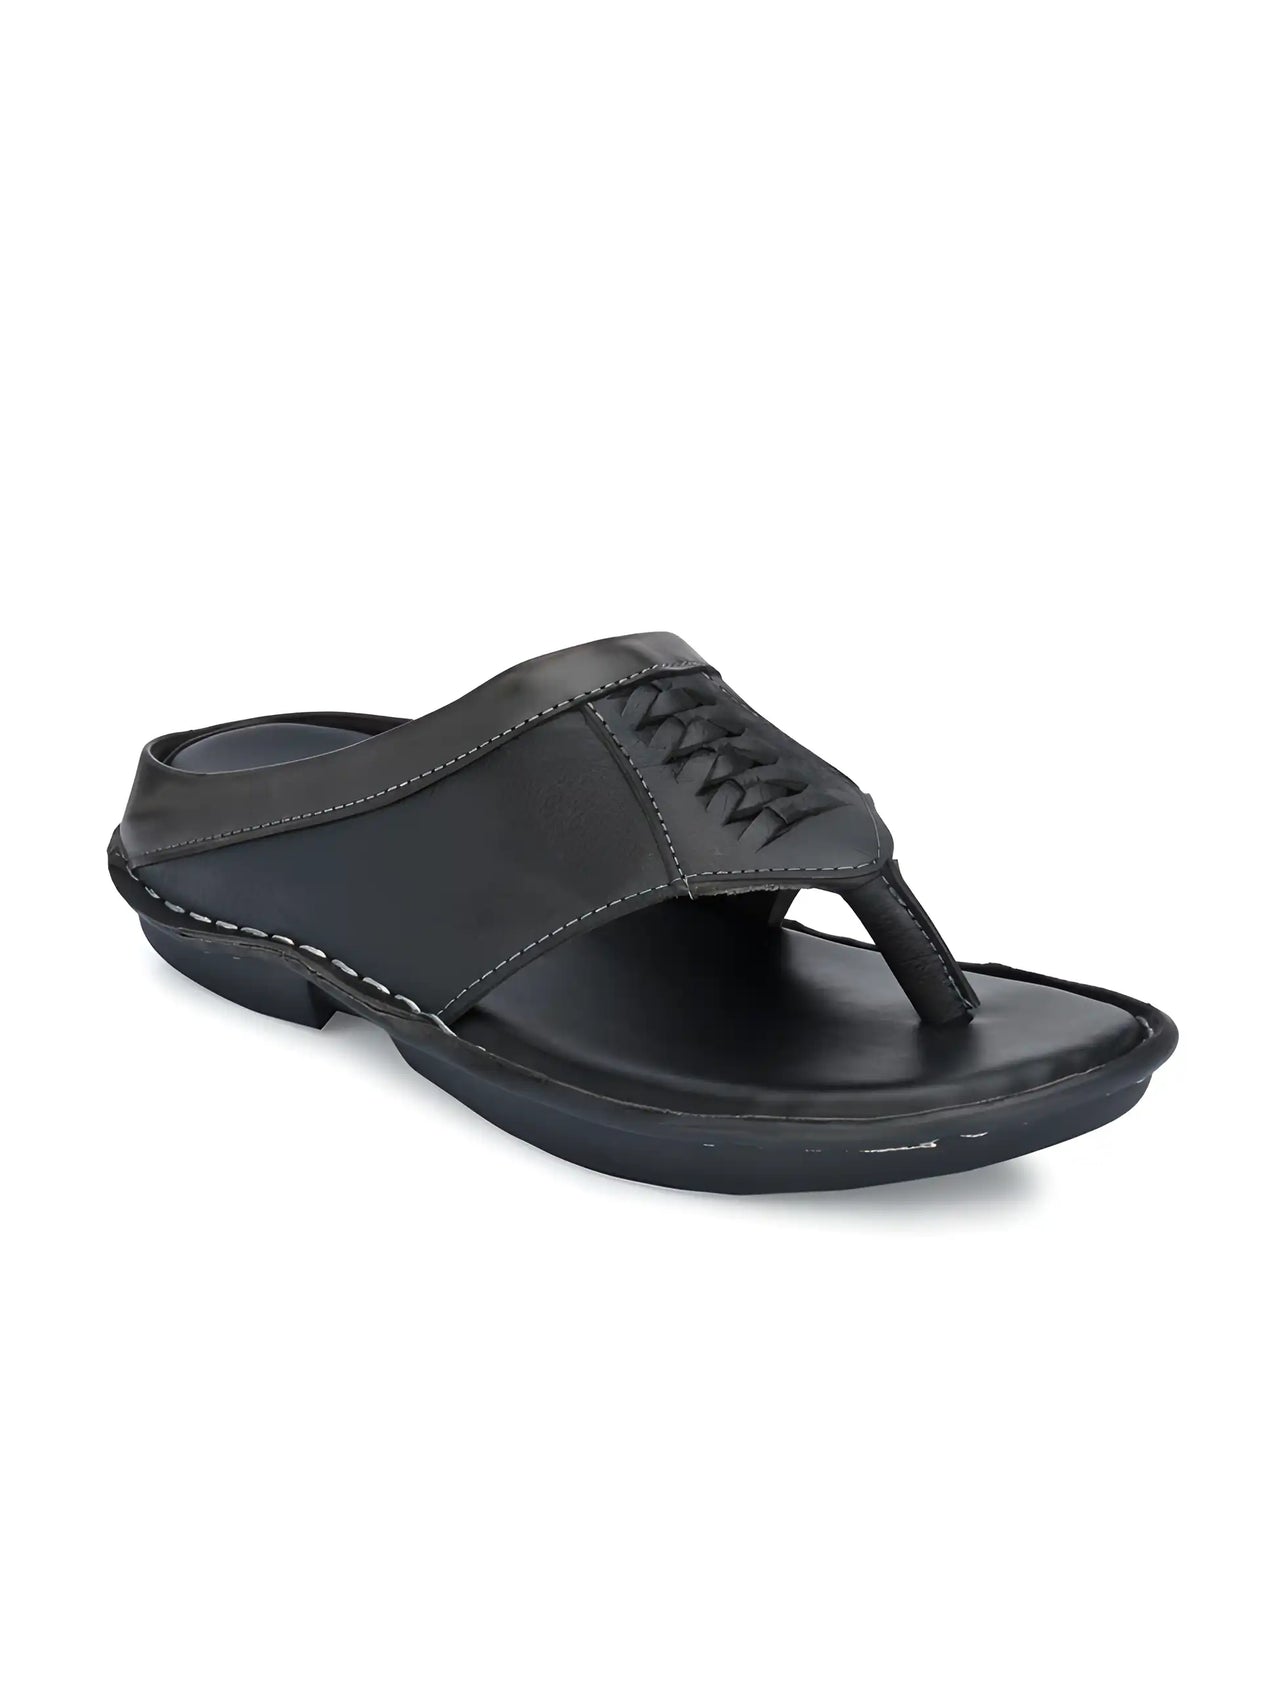 Bucik Men's Black Synthetic Leather Slip-On Casual Slipper